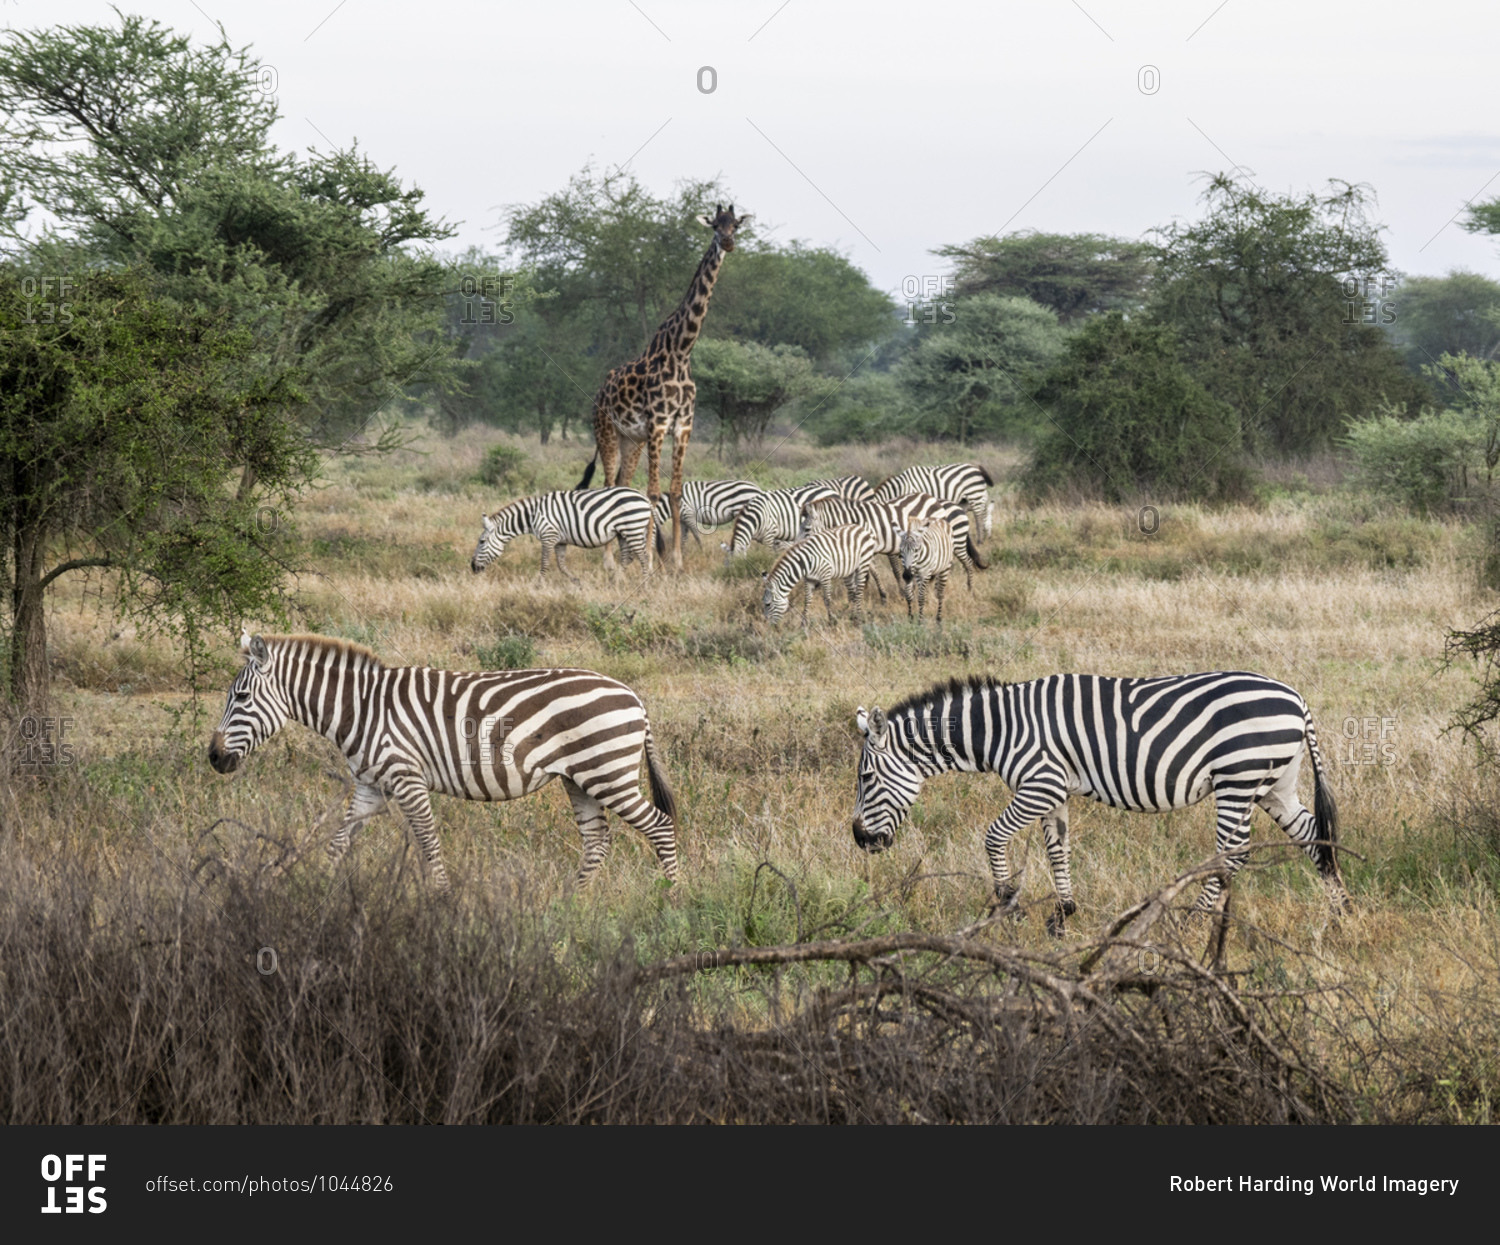 Plains zebras (Equus quagga) with giraffe in Serengeti National Park, UNESCO World Heritage Site, Tanzania, East Africa, Africa